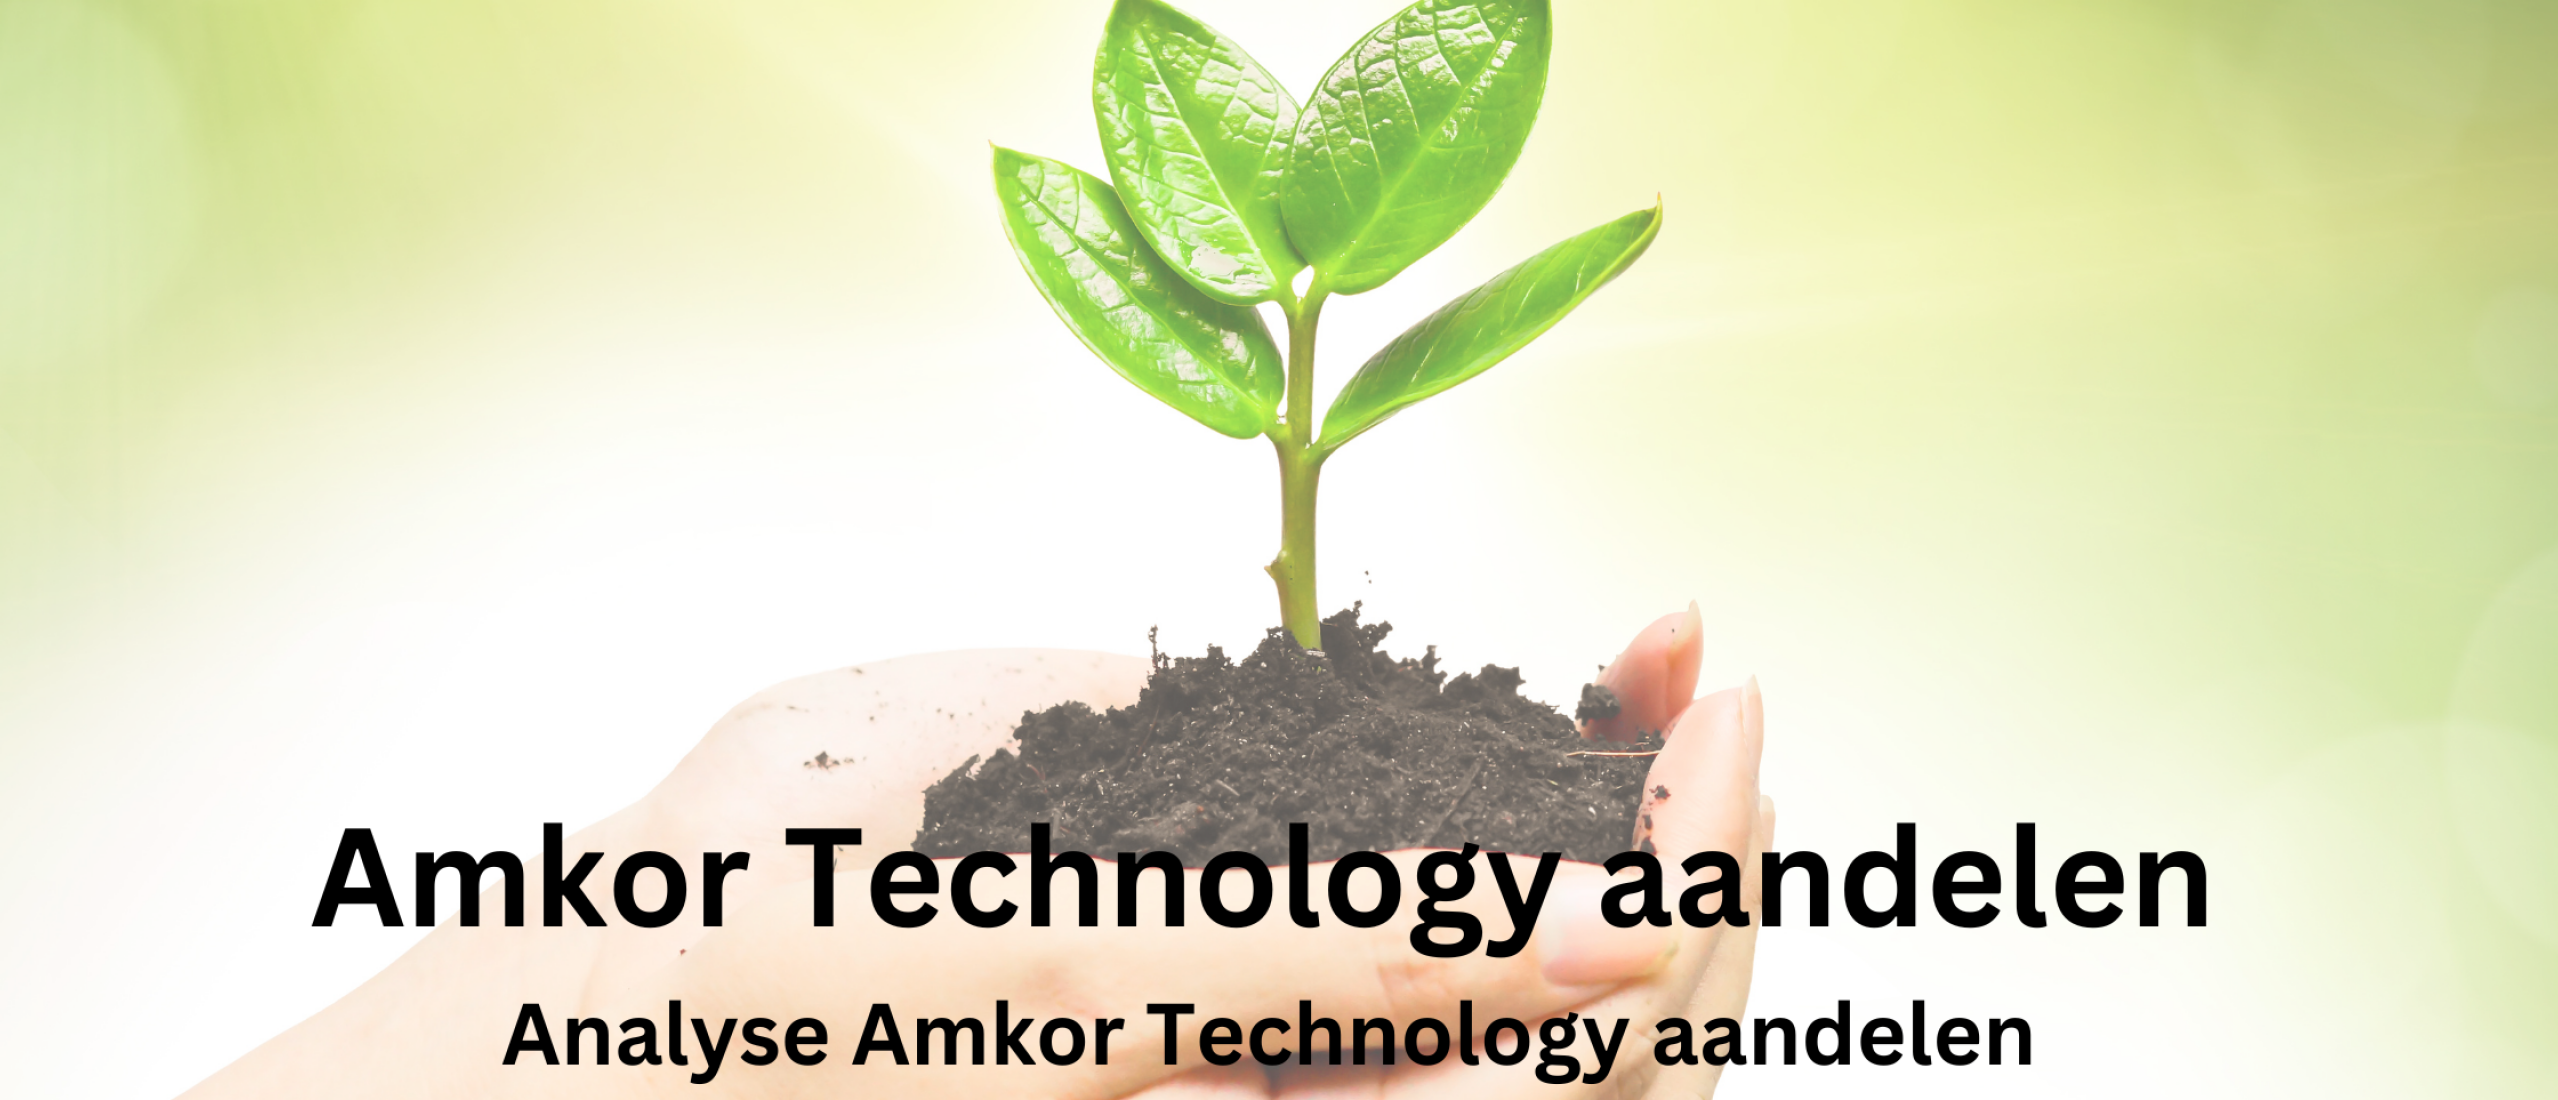 Amkor Technology aandelen